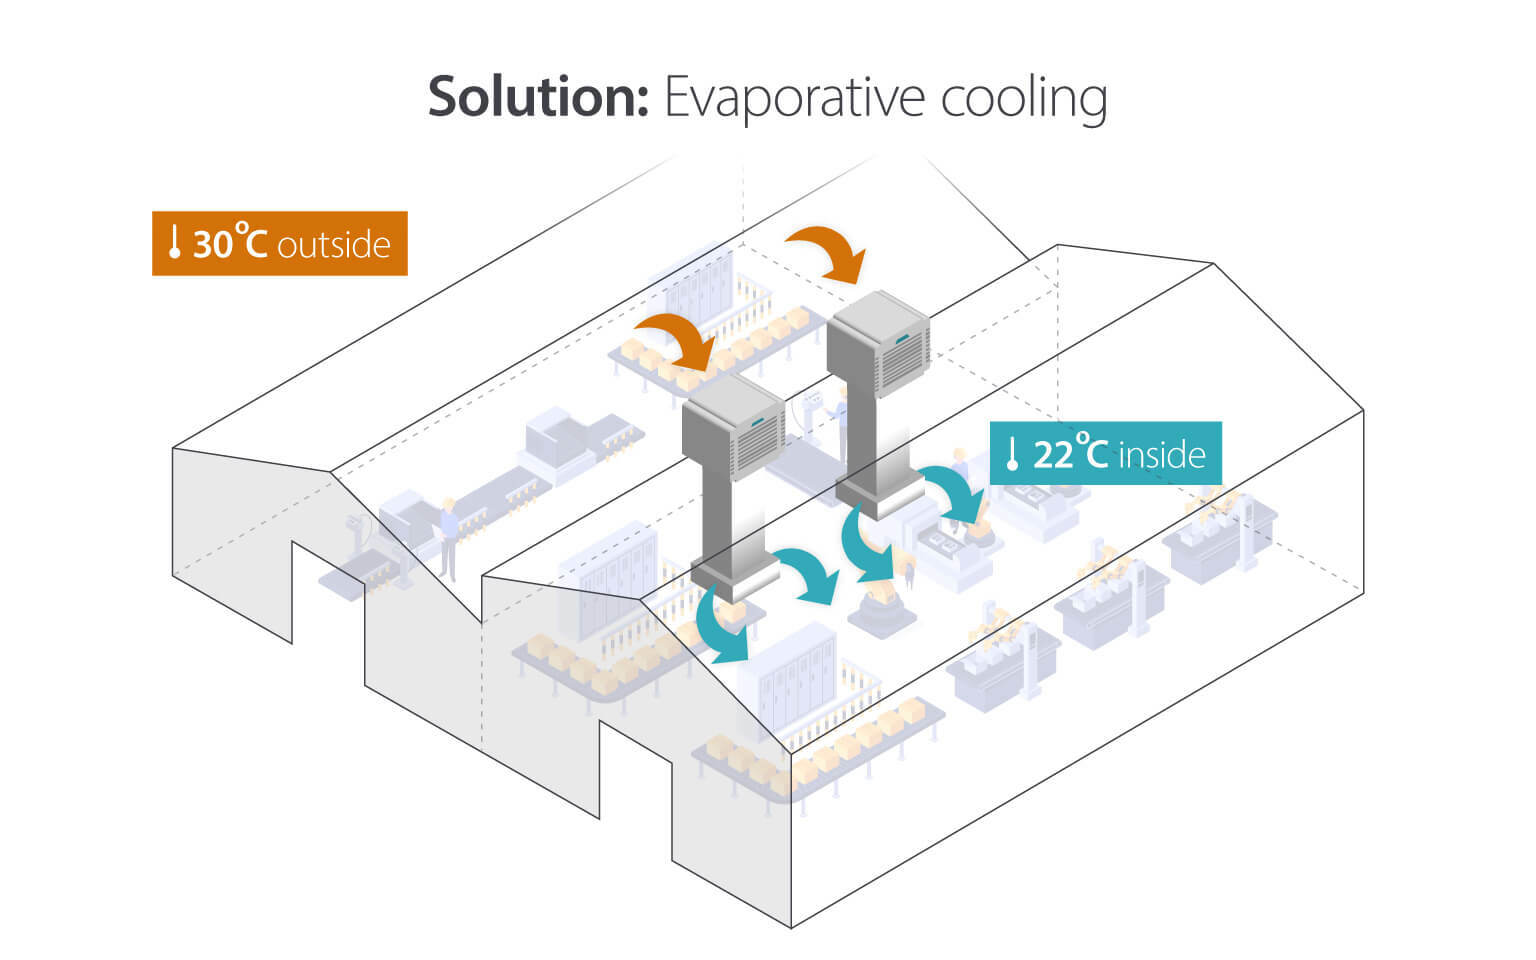 Solution evaporative cooling